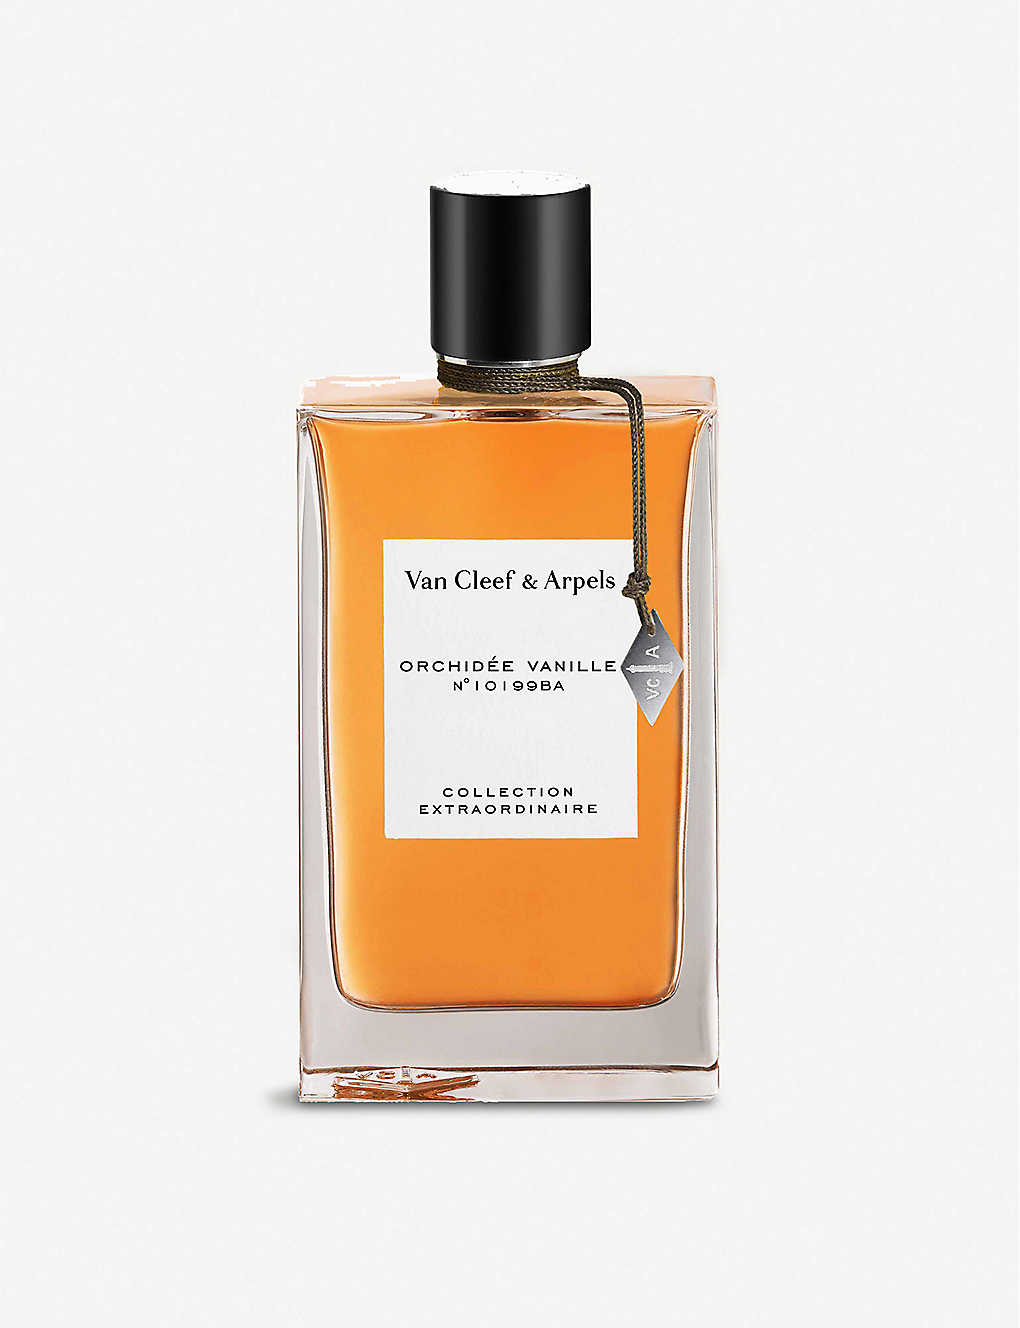 Van Cleef Orchideé Vanille eau de parfum 75 ml